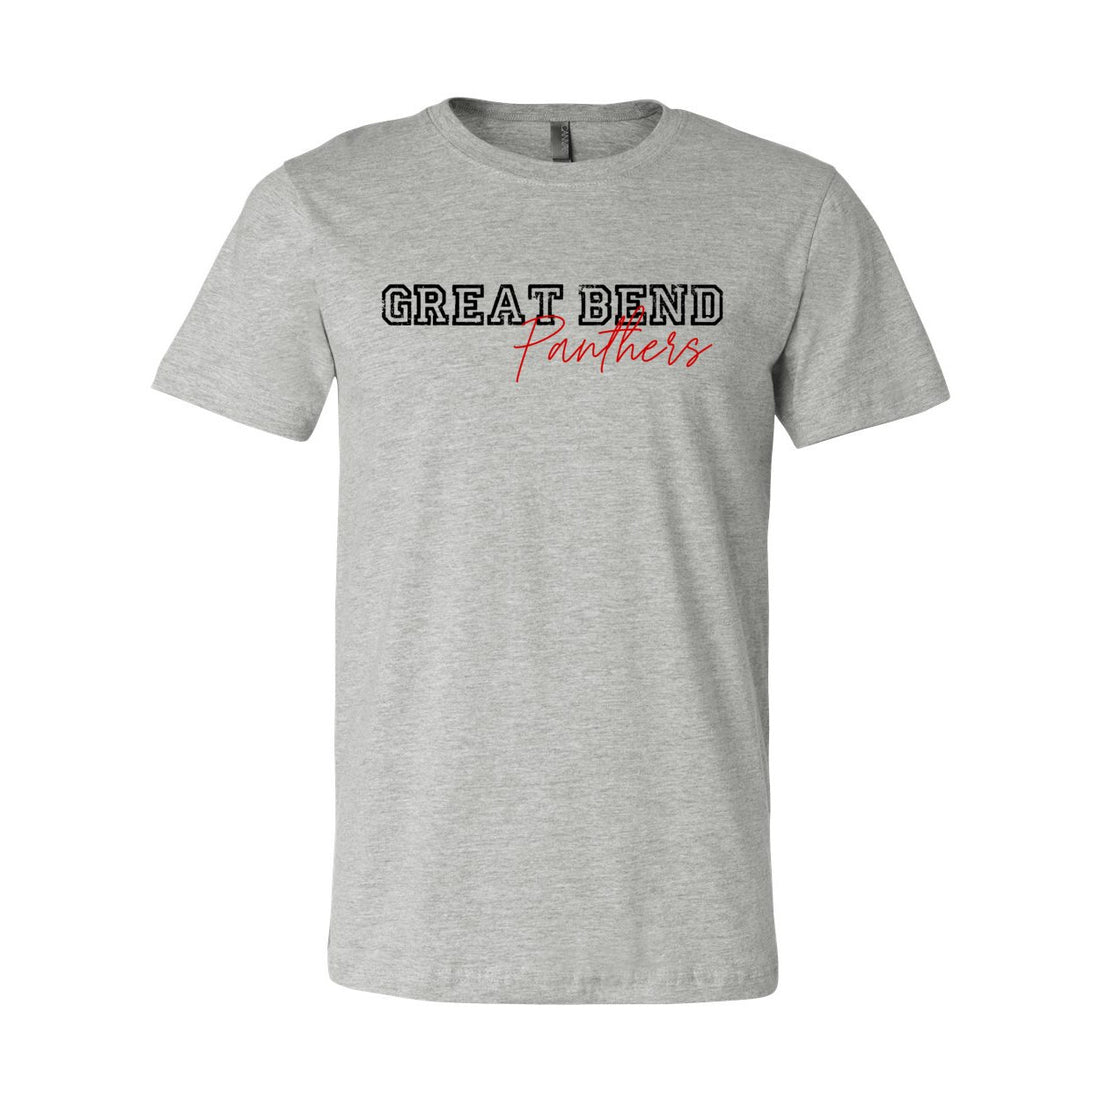 Great Bend Panthers T-Shirt - T-Shirts - Positively Sassy - Great Bend Panthers T-Shirt